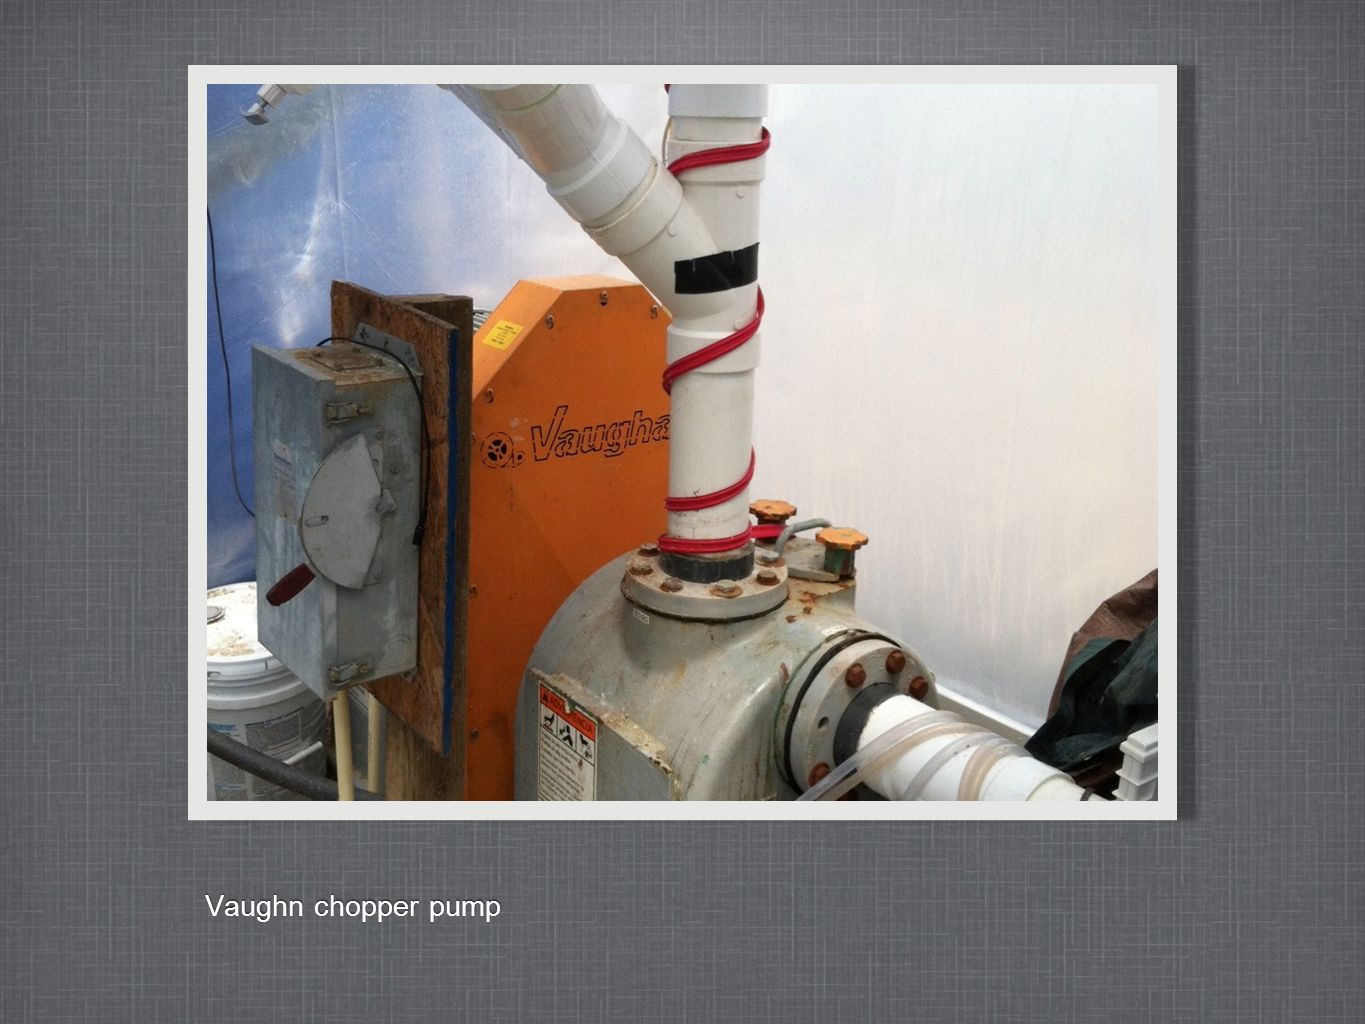 Vaughn chopper pump